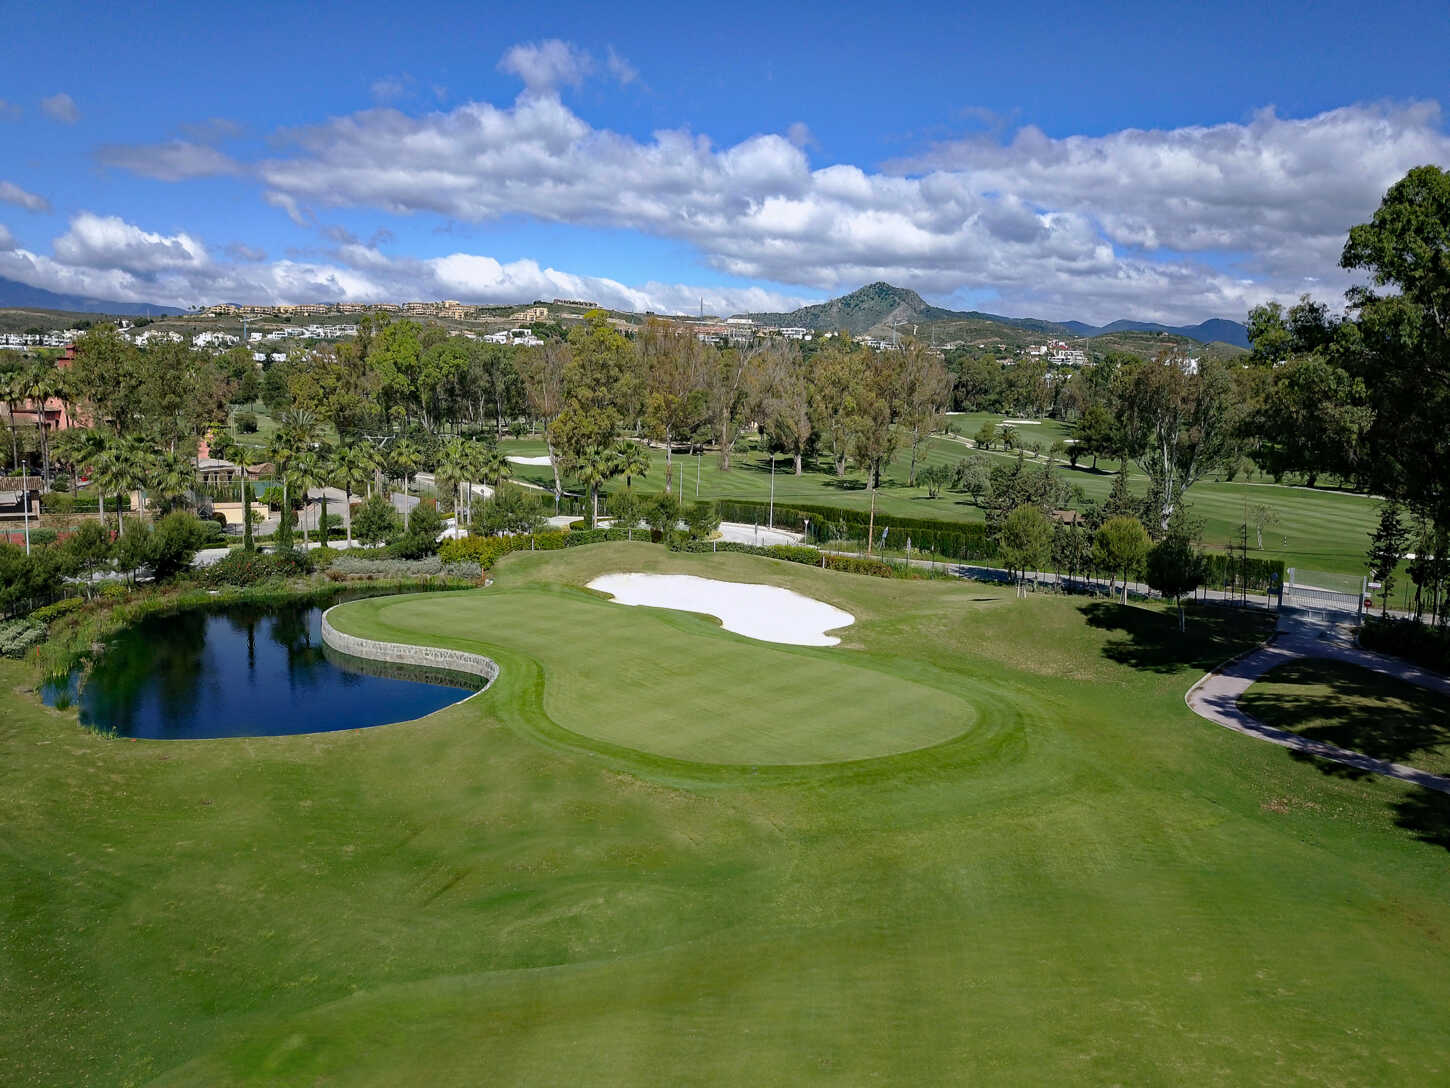 Atalaya Golf & Country Club